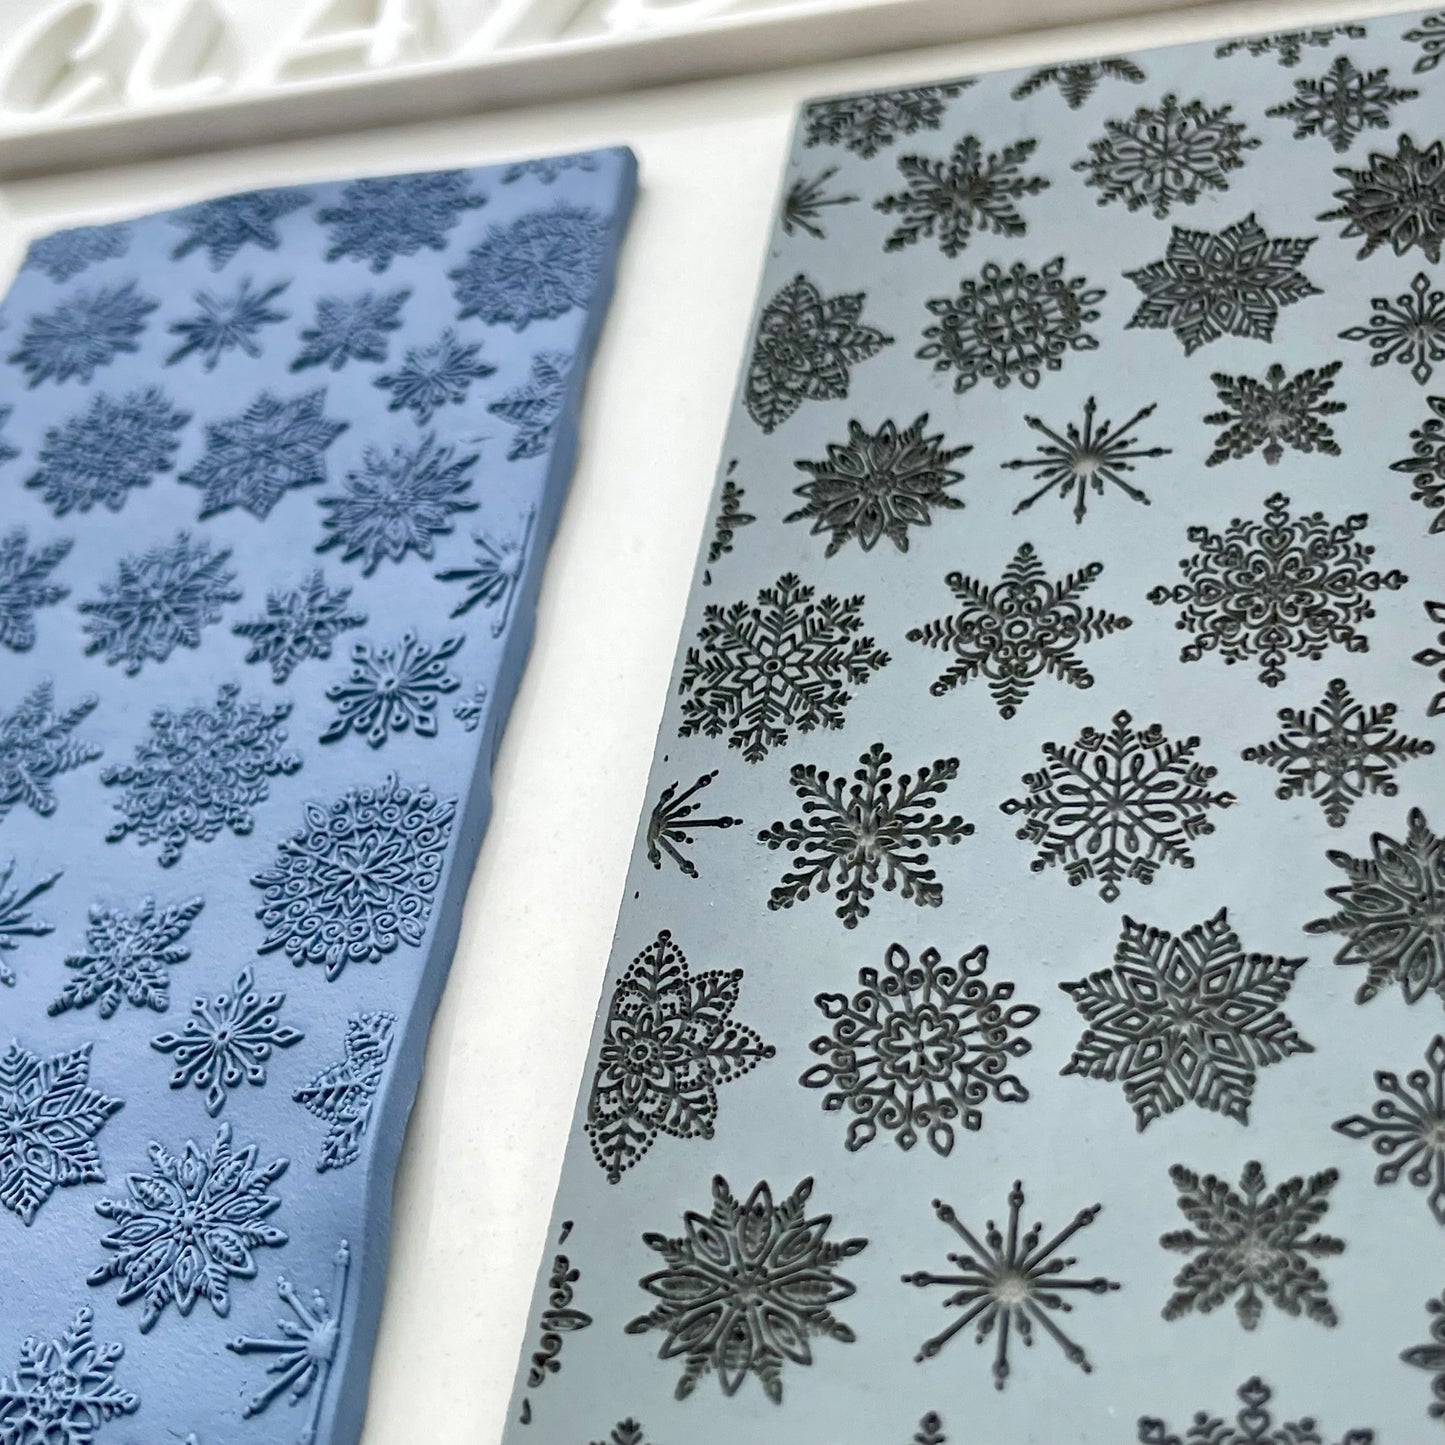 Snowflakes texture mat